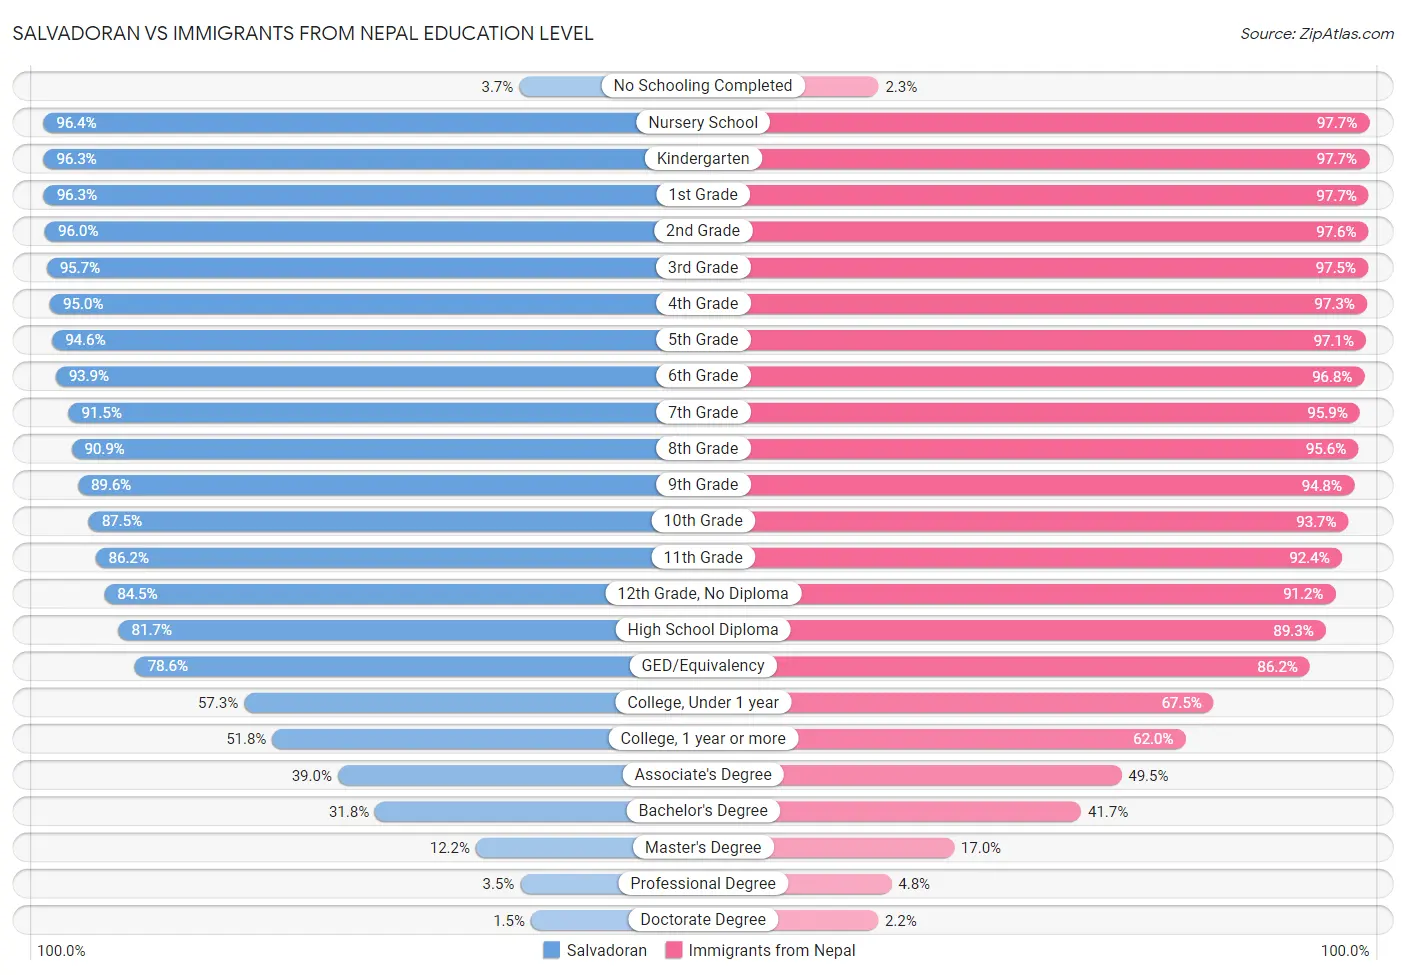 Salvadoran vs Immigrants from Nepal Education Level